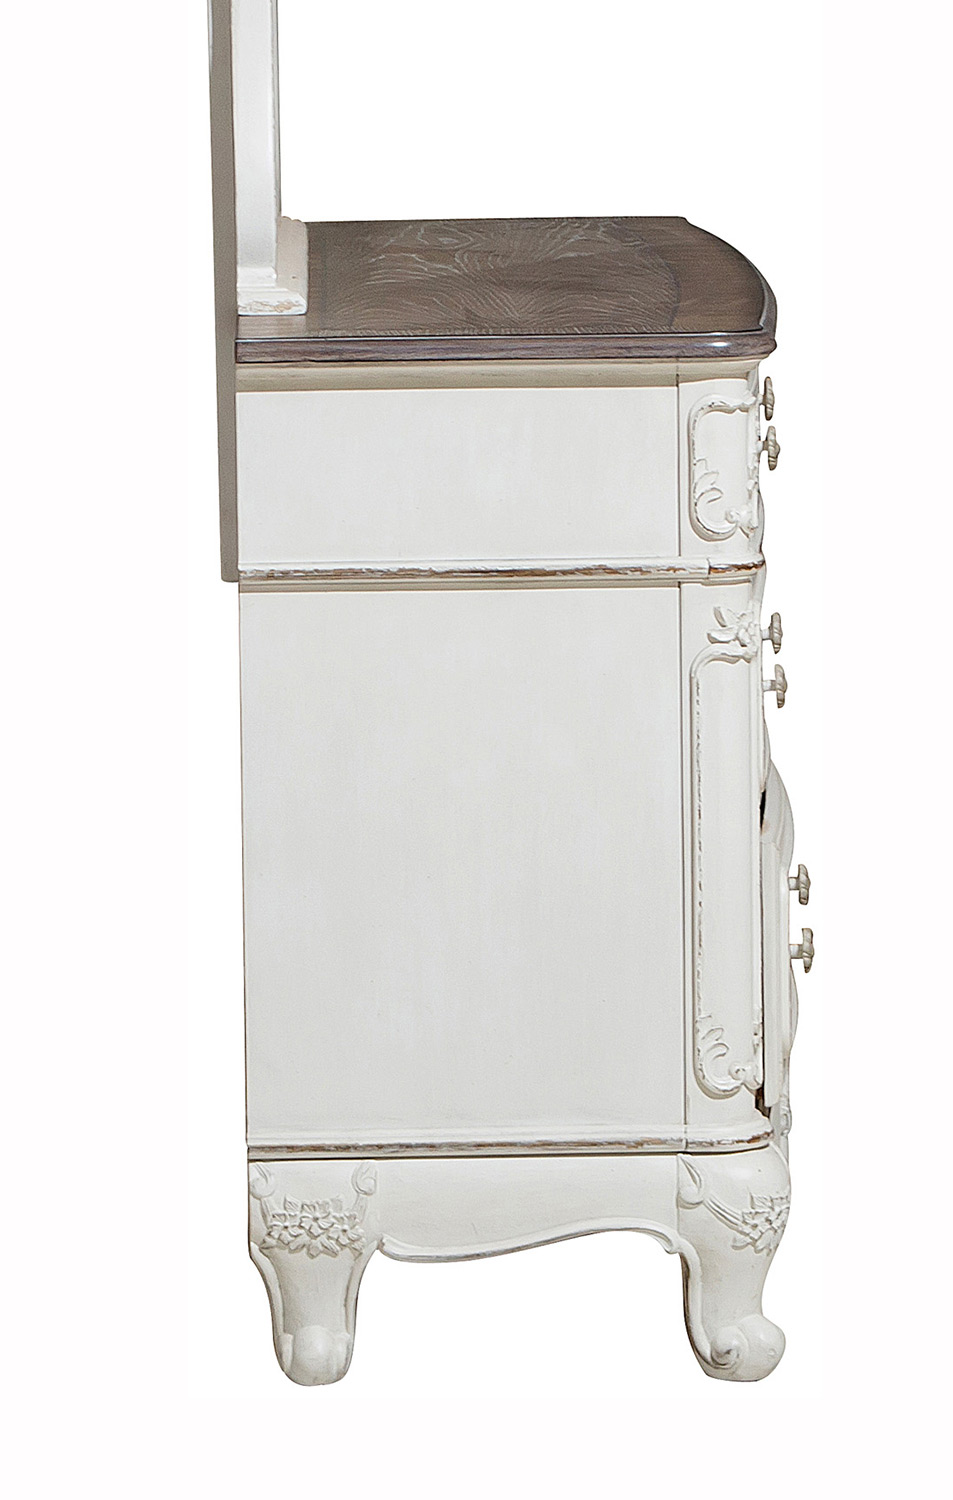 Homelegance Cinderella Dresser - Antique White with Gray Rub-Through